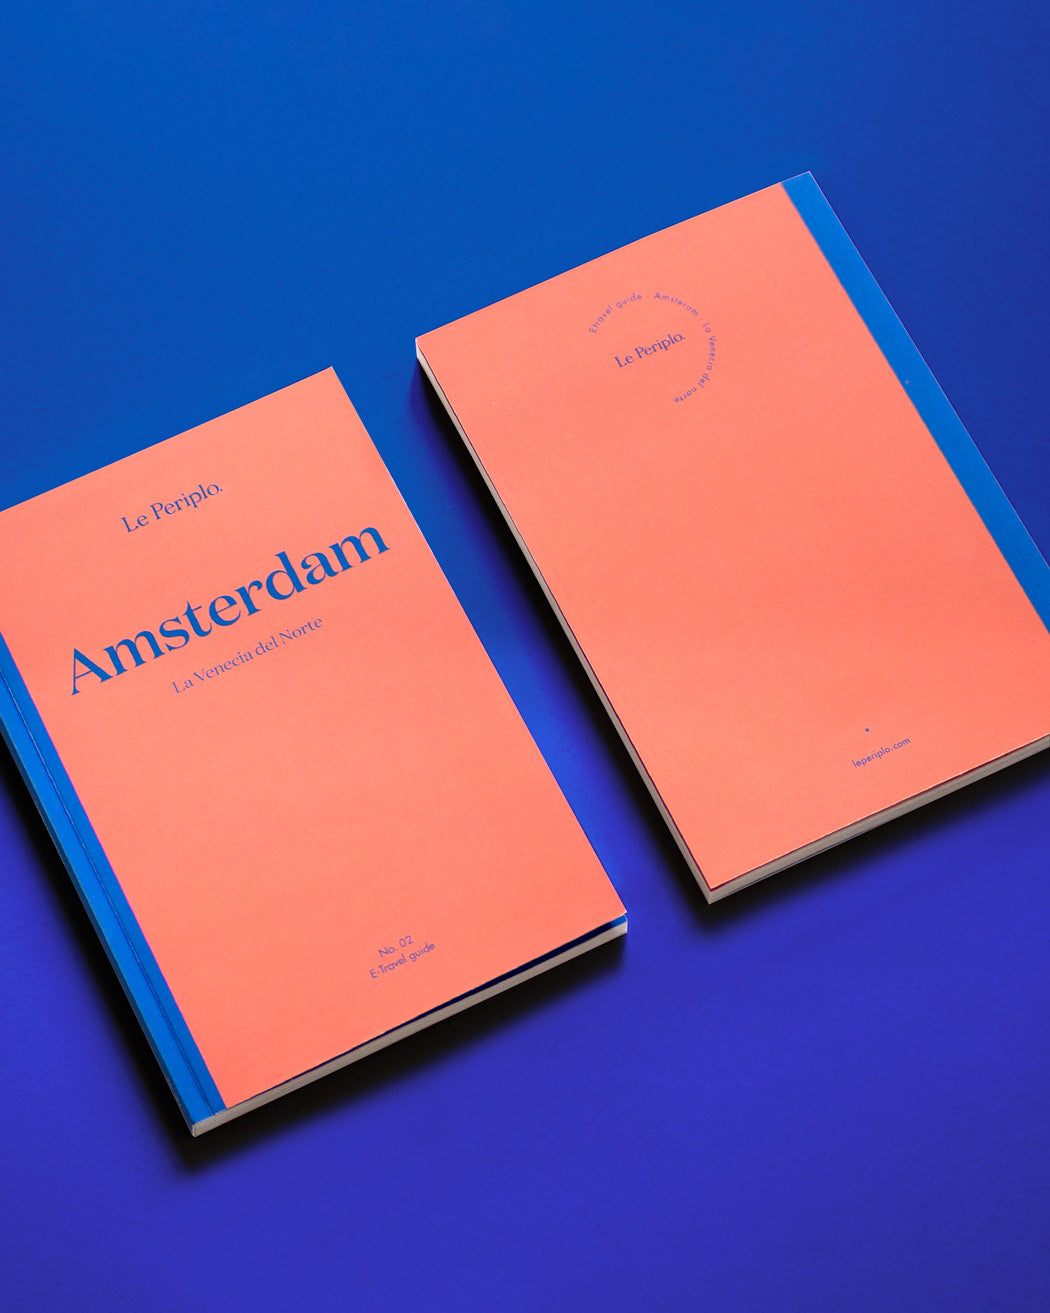 Amsterdam (impresa)